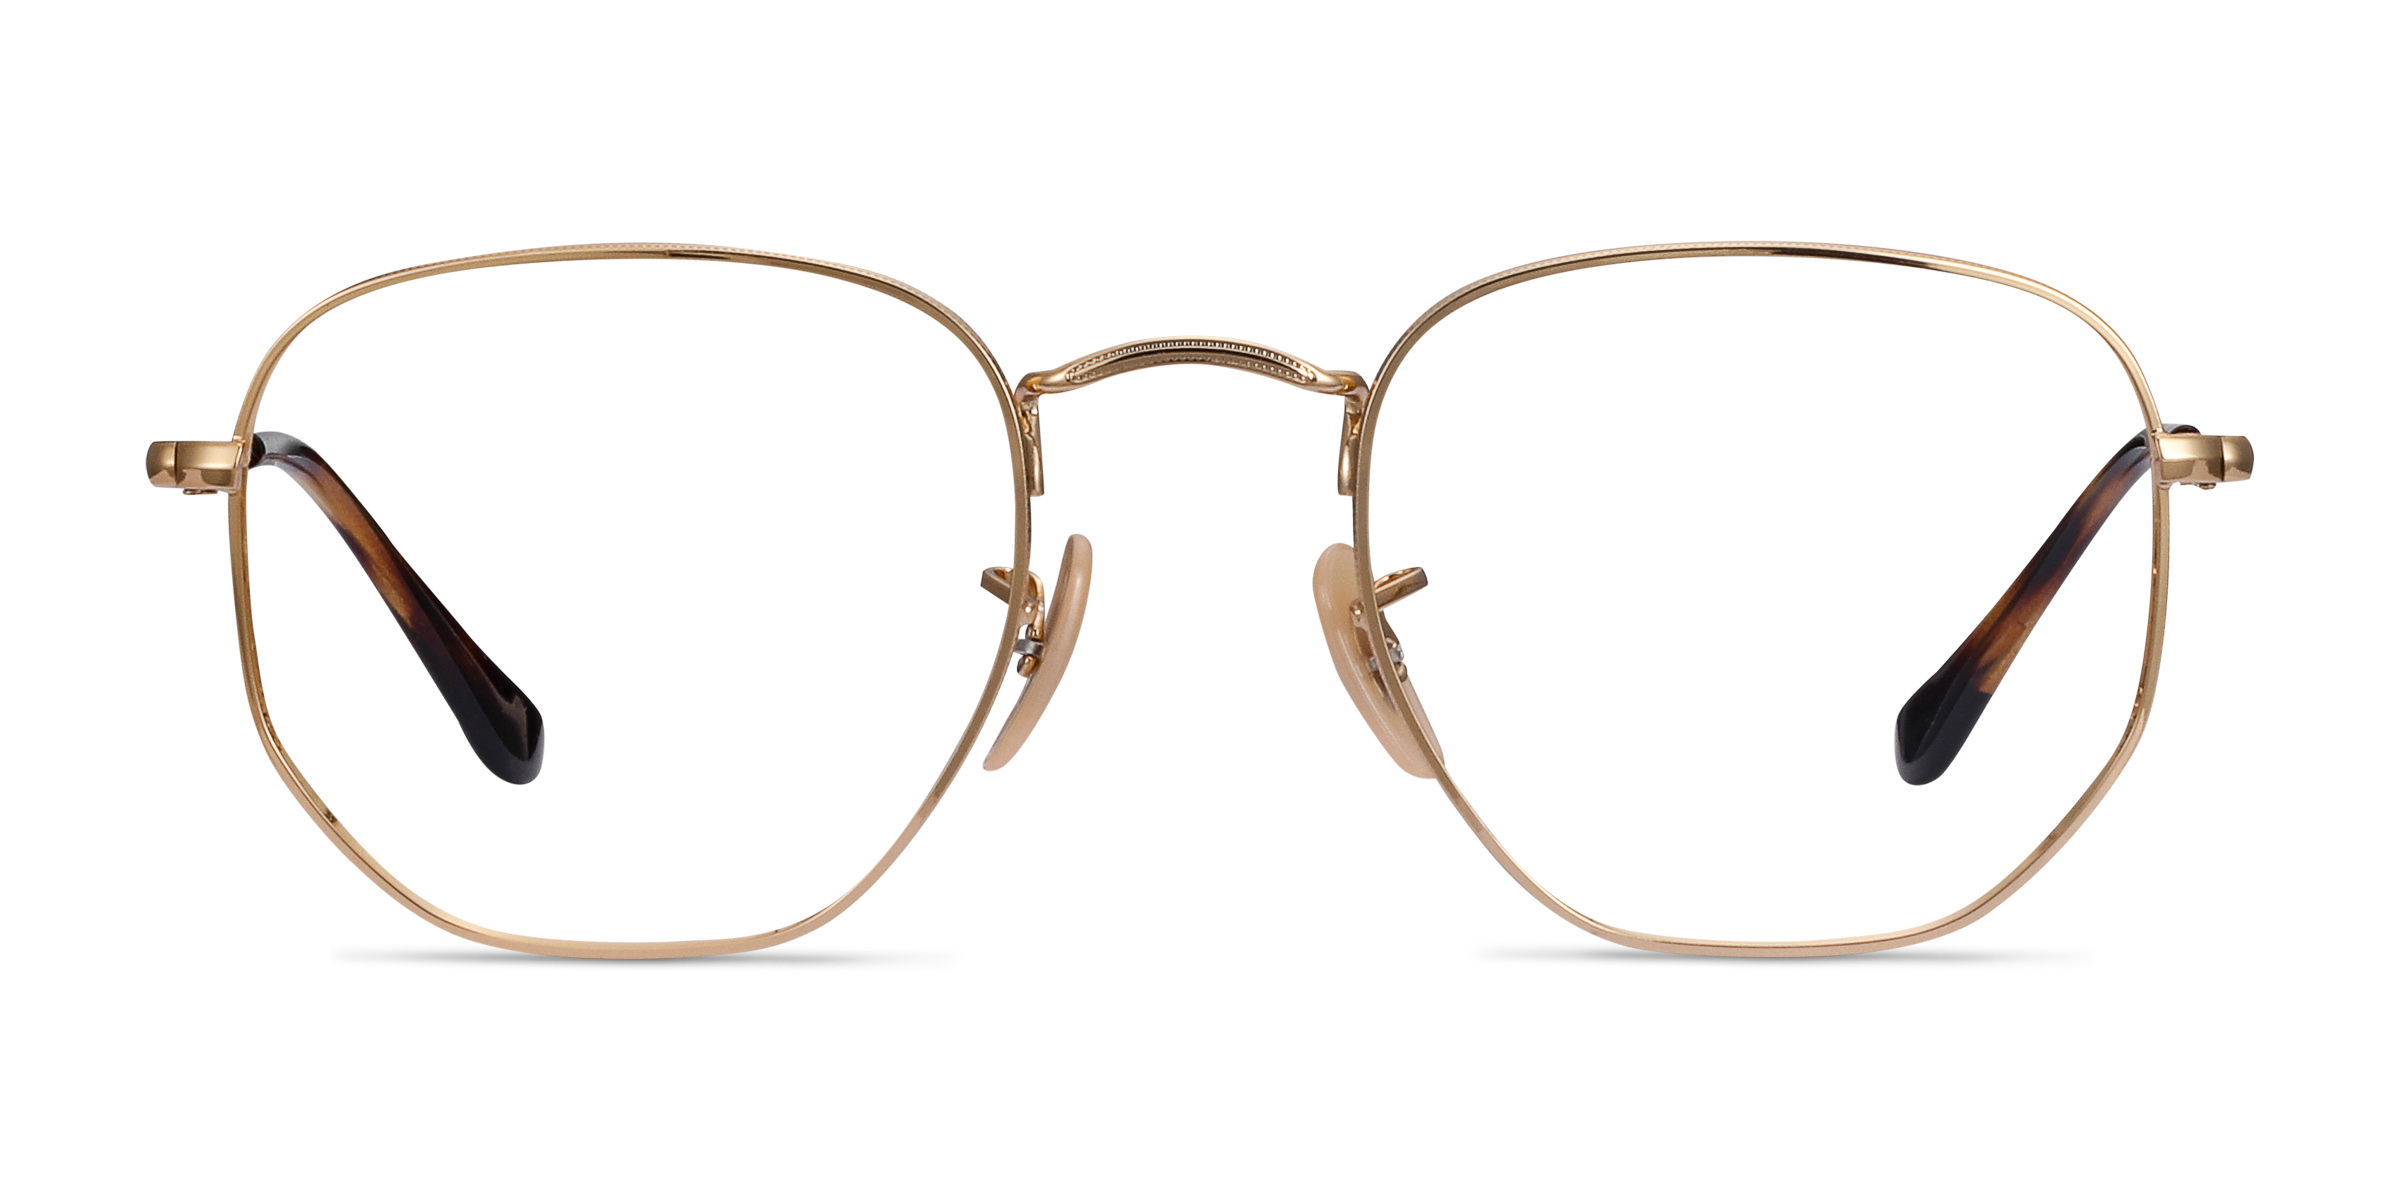 Ray-Ban RB6448 - Square Gold Frame Eyeglasses | Eyebuydirect